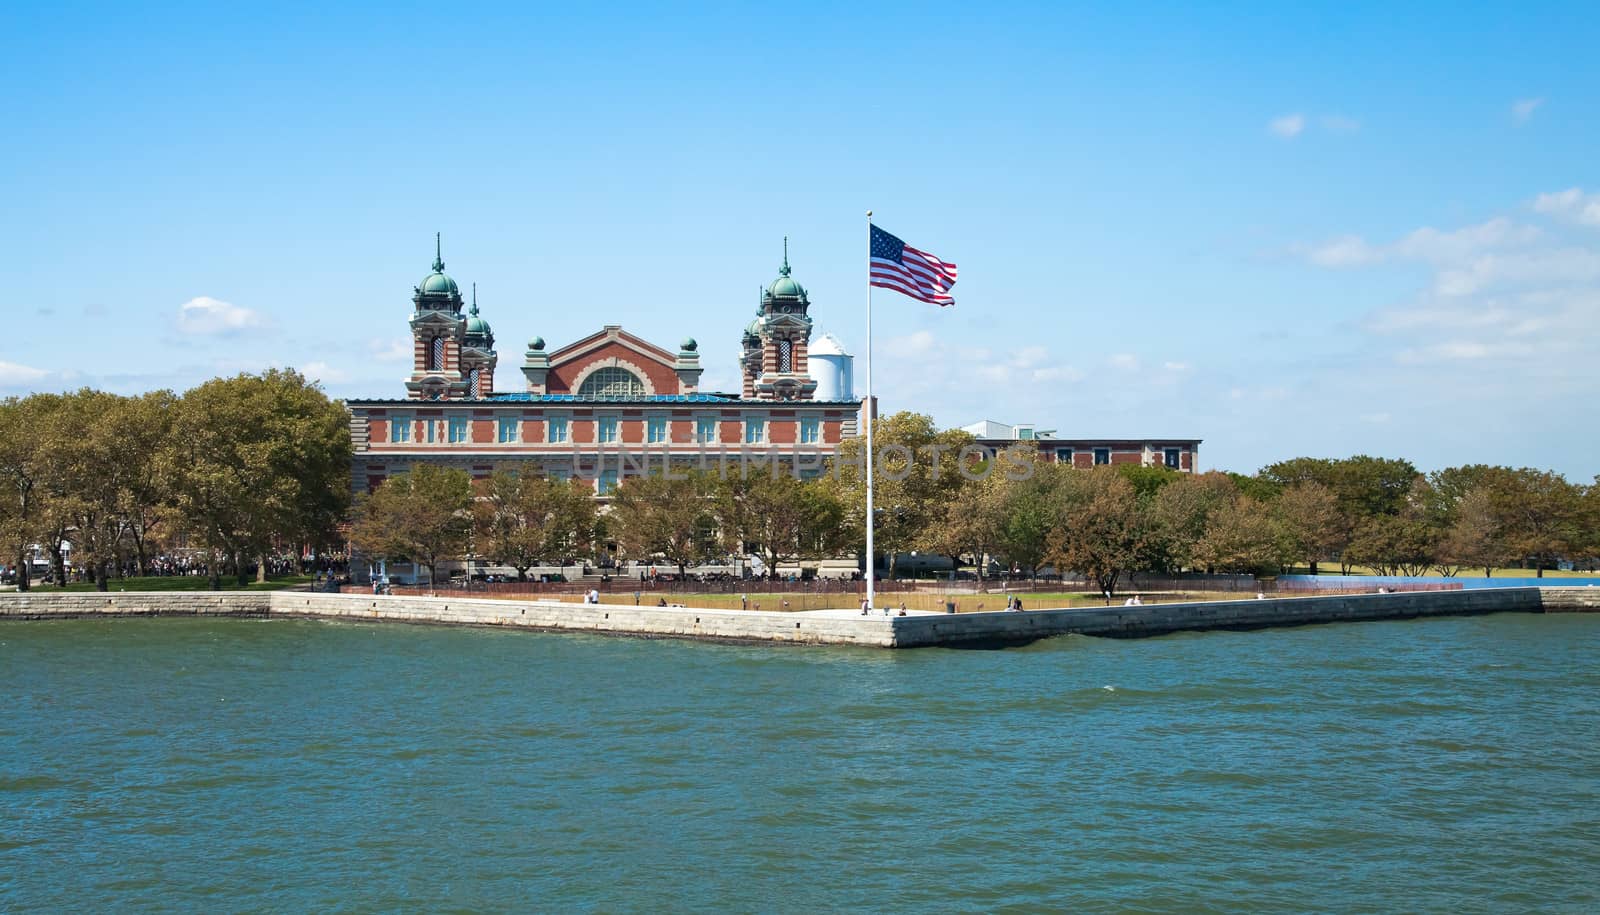 Main immigration building on Ellis Island in New York harbor